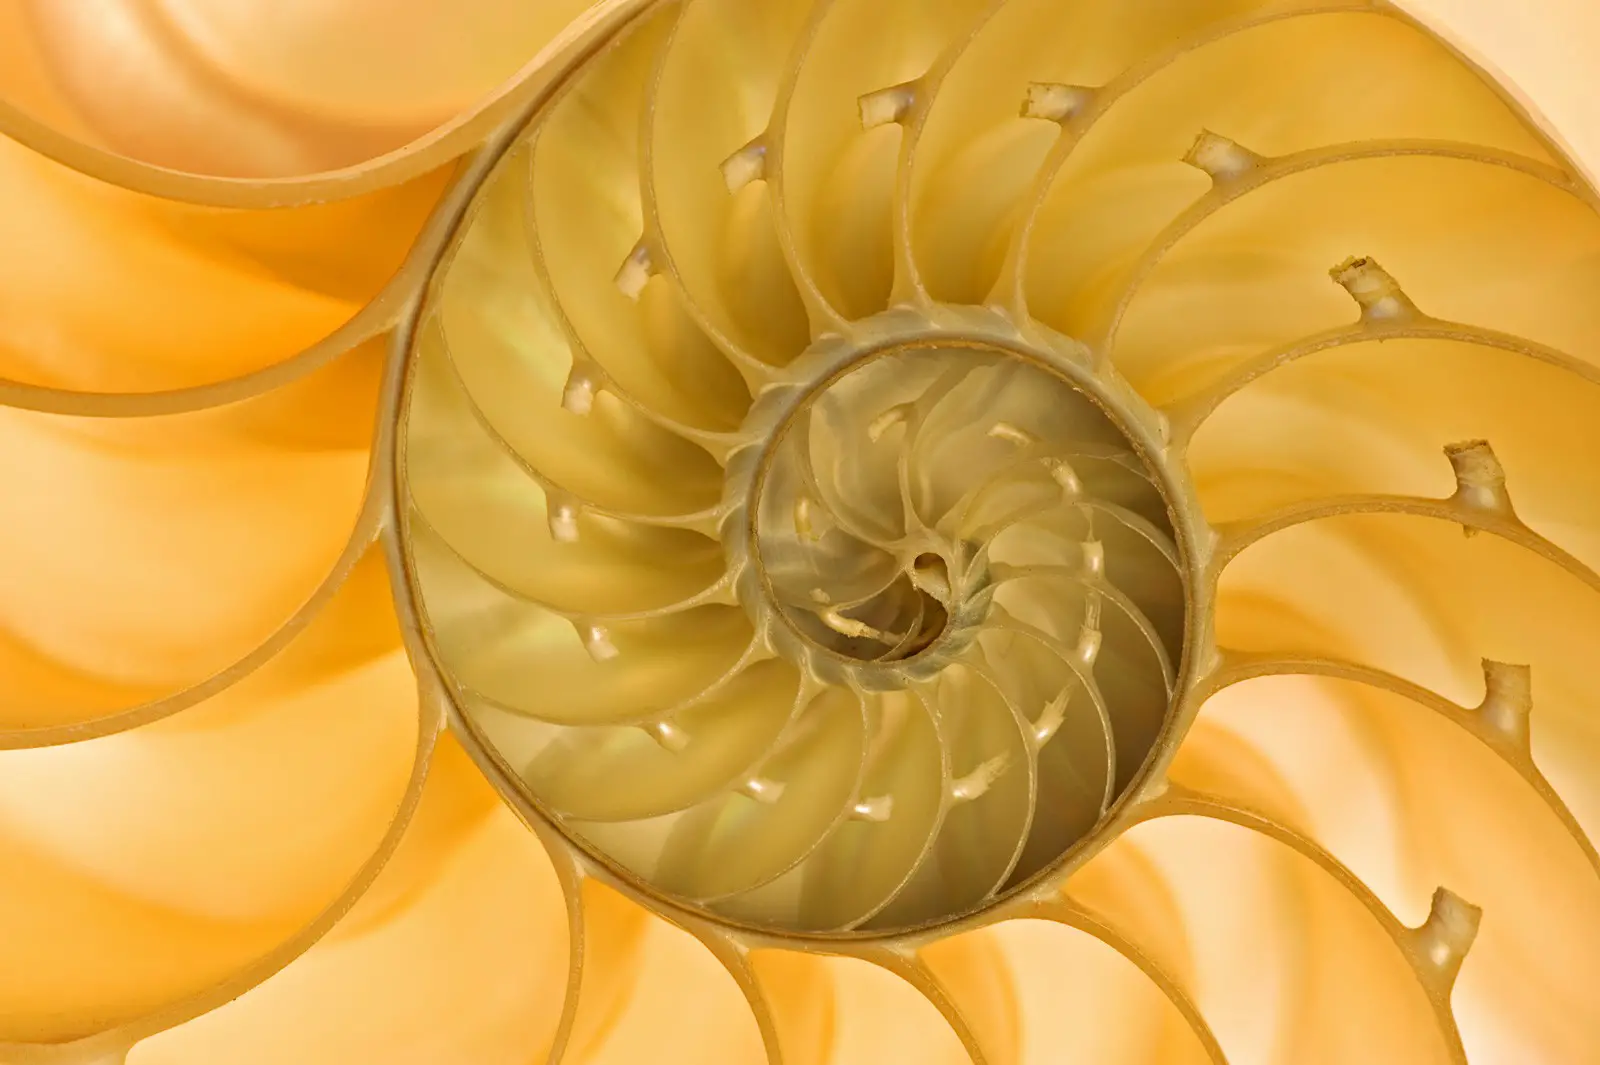 The Ancient Symbolism Of Spirals